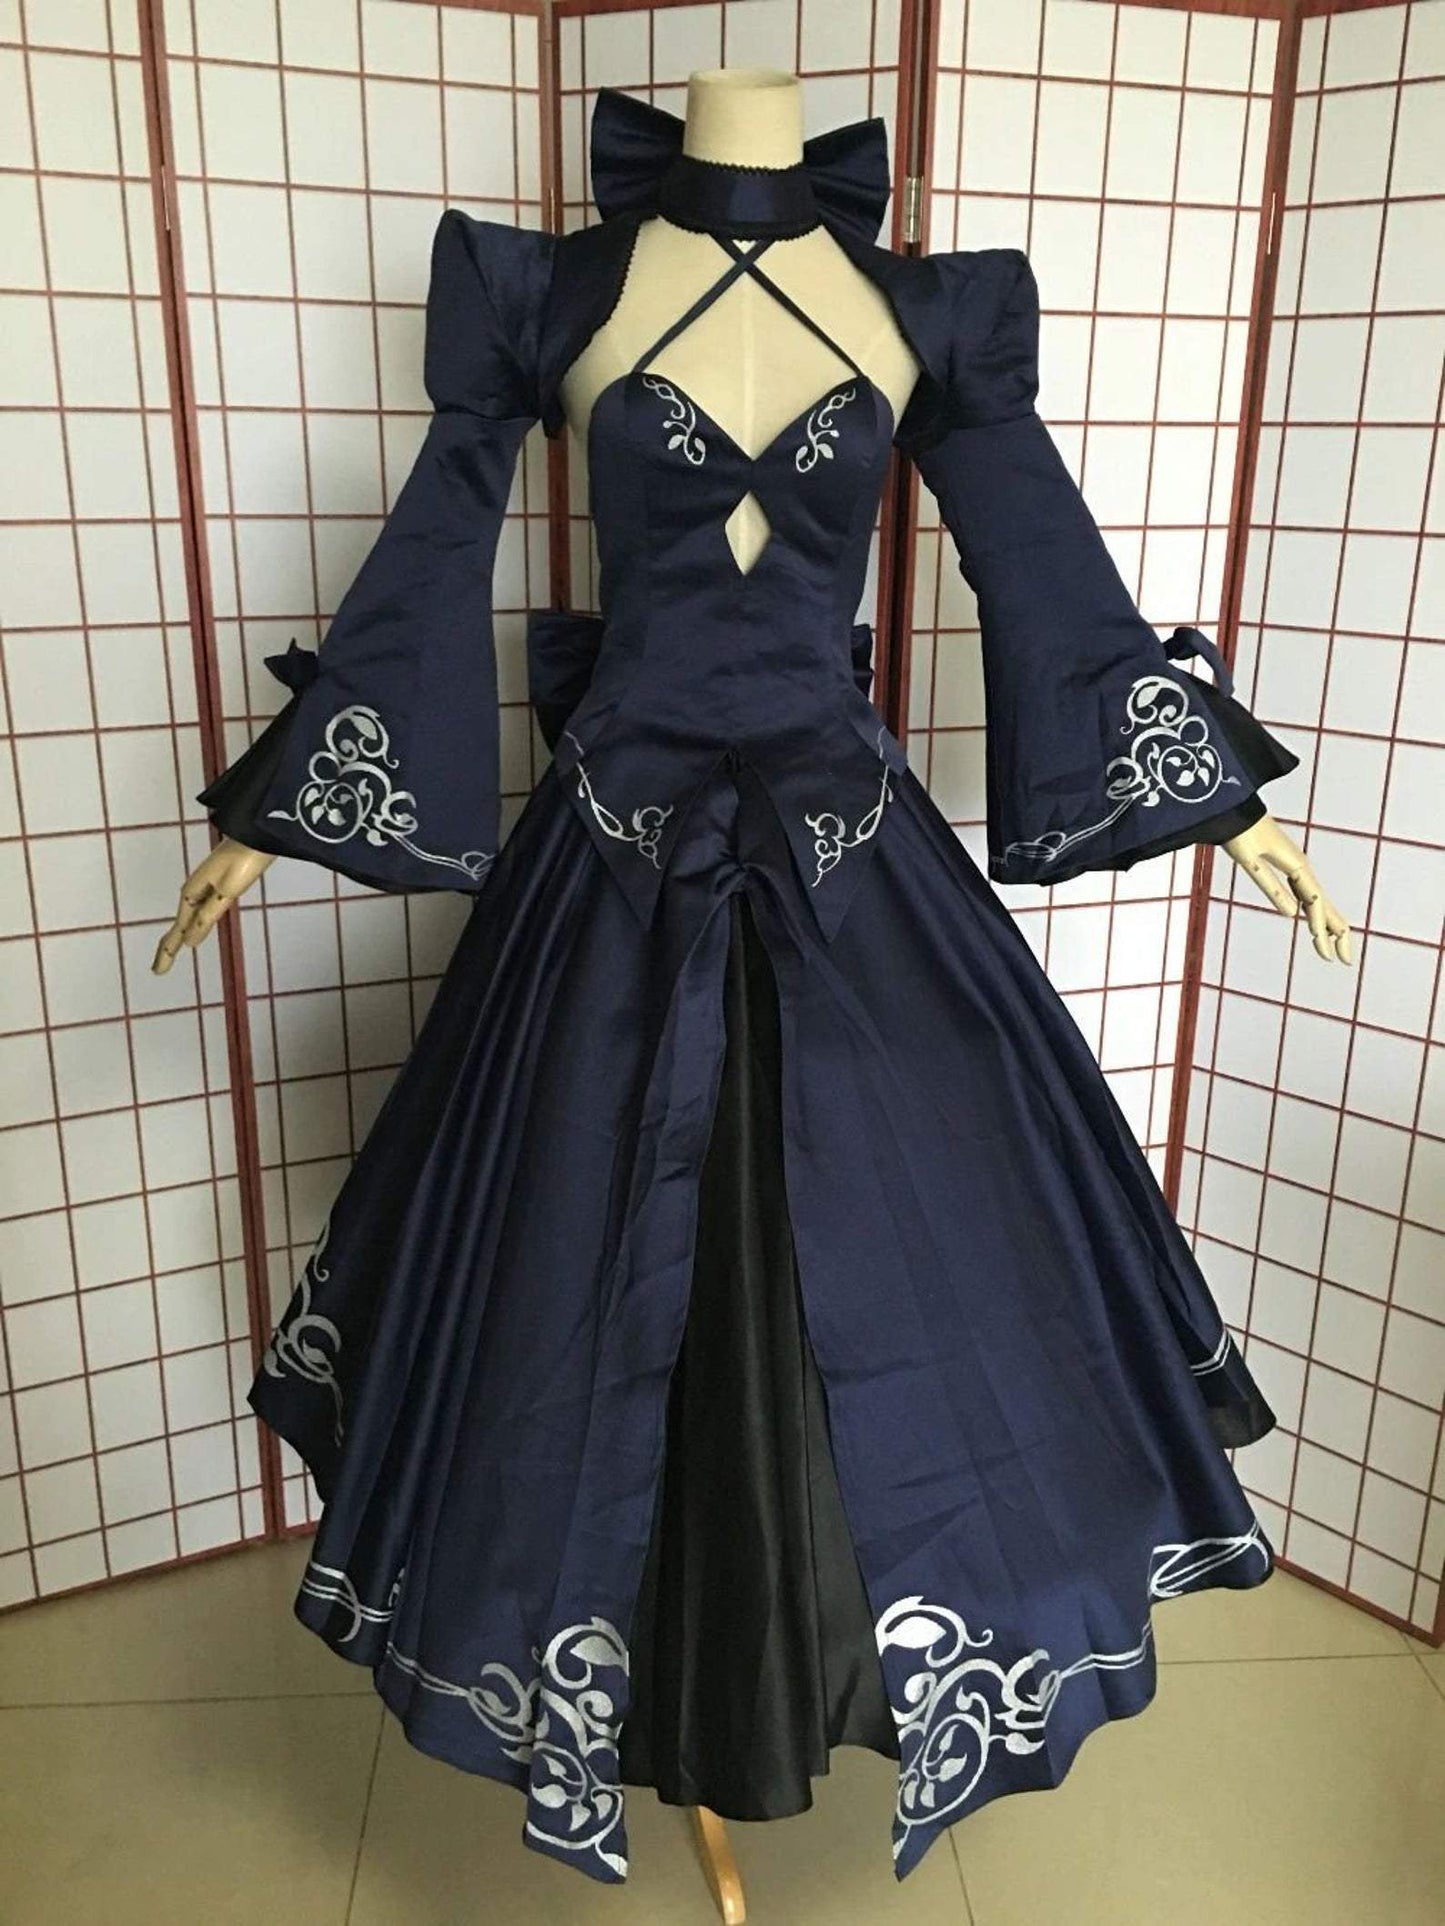 Black Saber Cosplay Costume Fate Stay Night Anime FGO Bride Gothic Lolita Dress Saber Alter Artoria Pendragon-Fate Stay Night, FGO, Saber - MoonCos